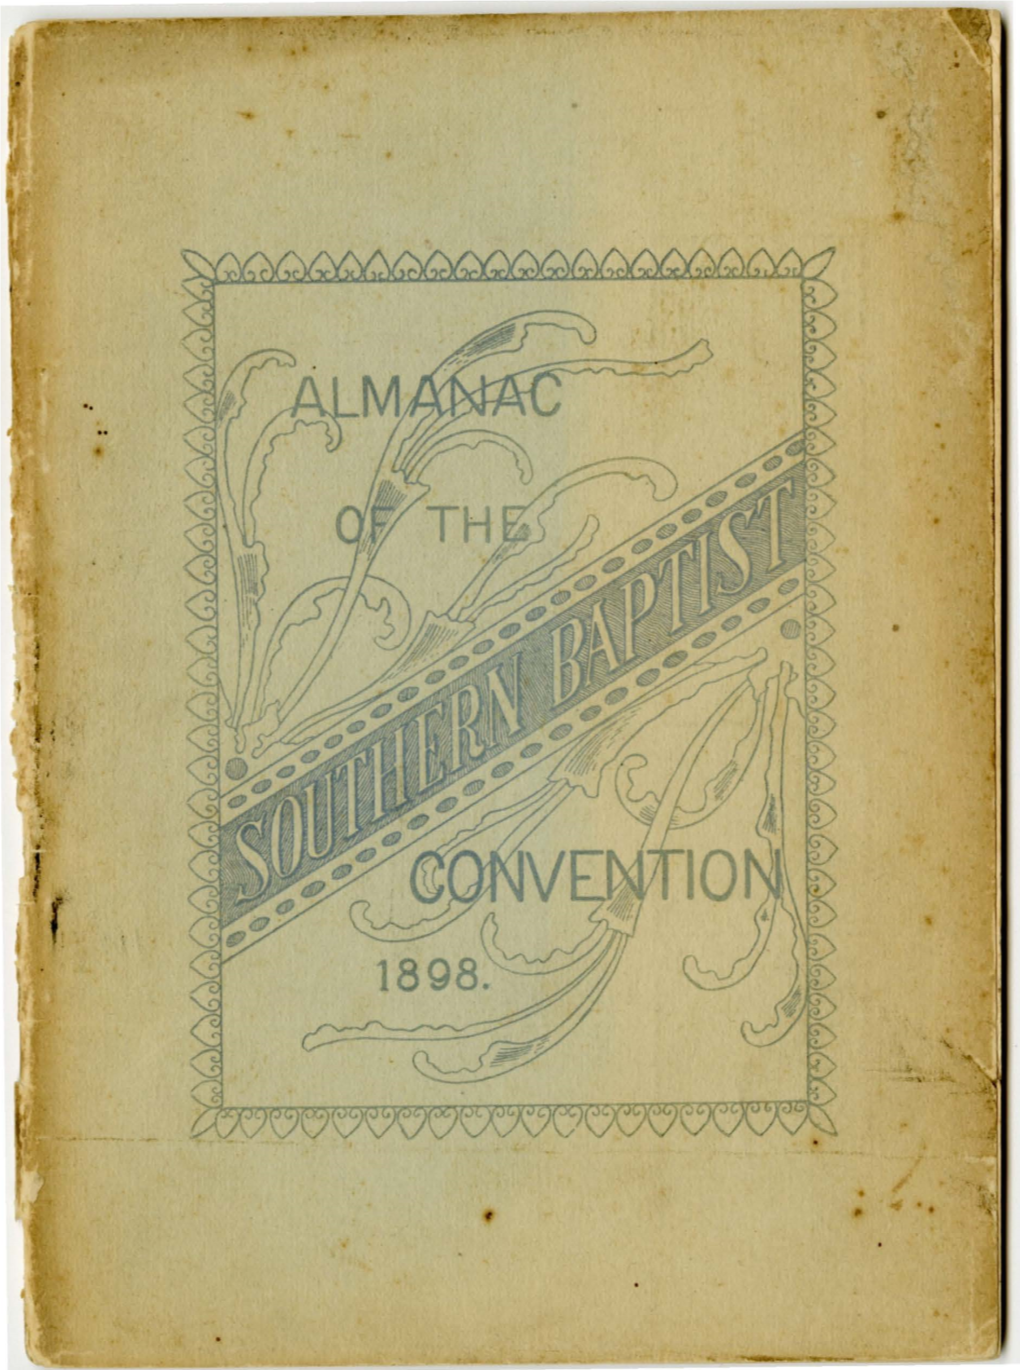 SBC Almanac 1898.Pdf